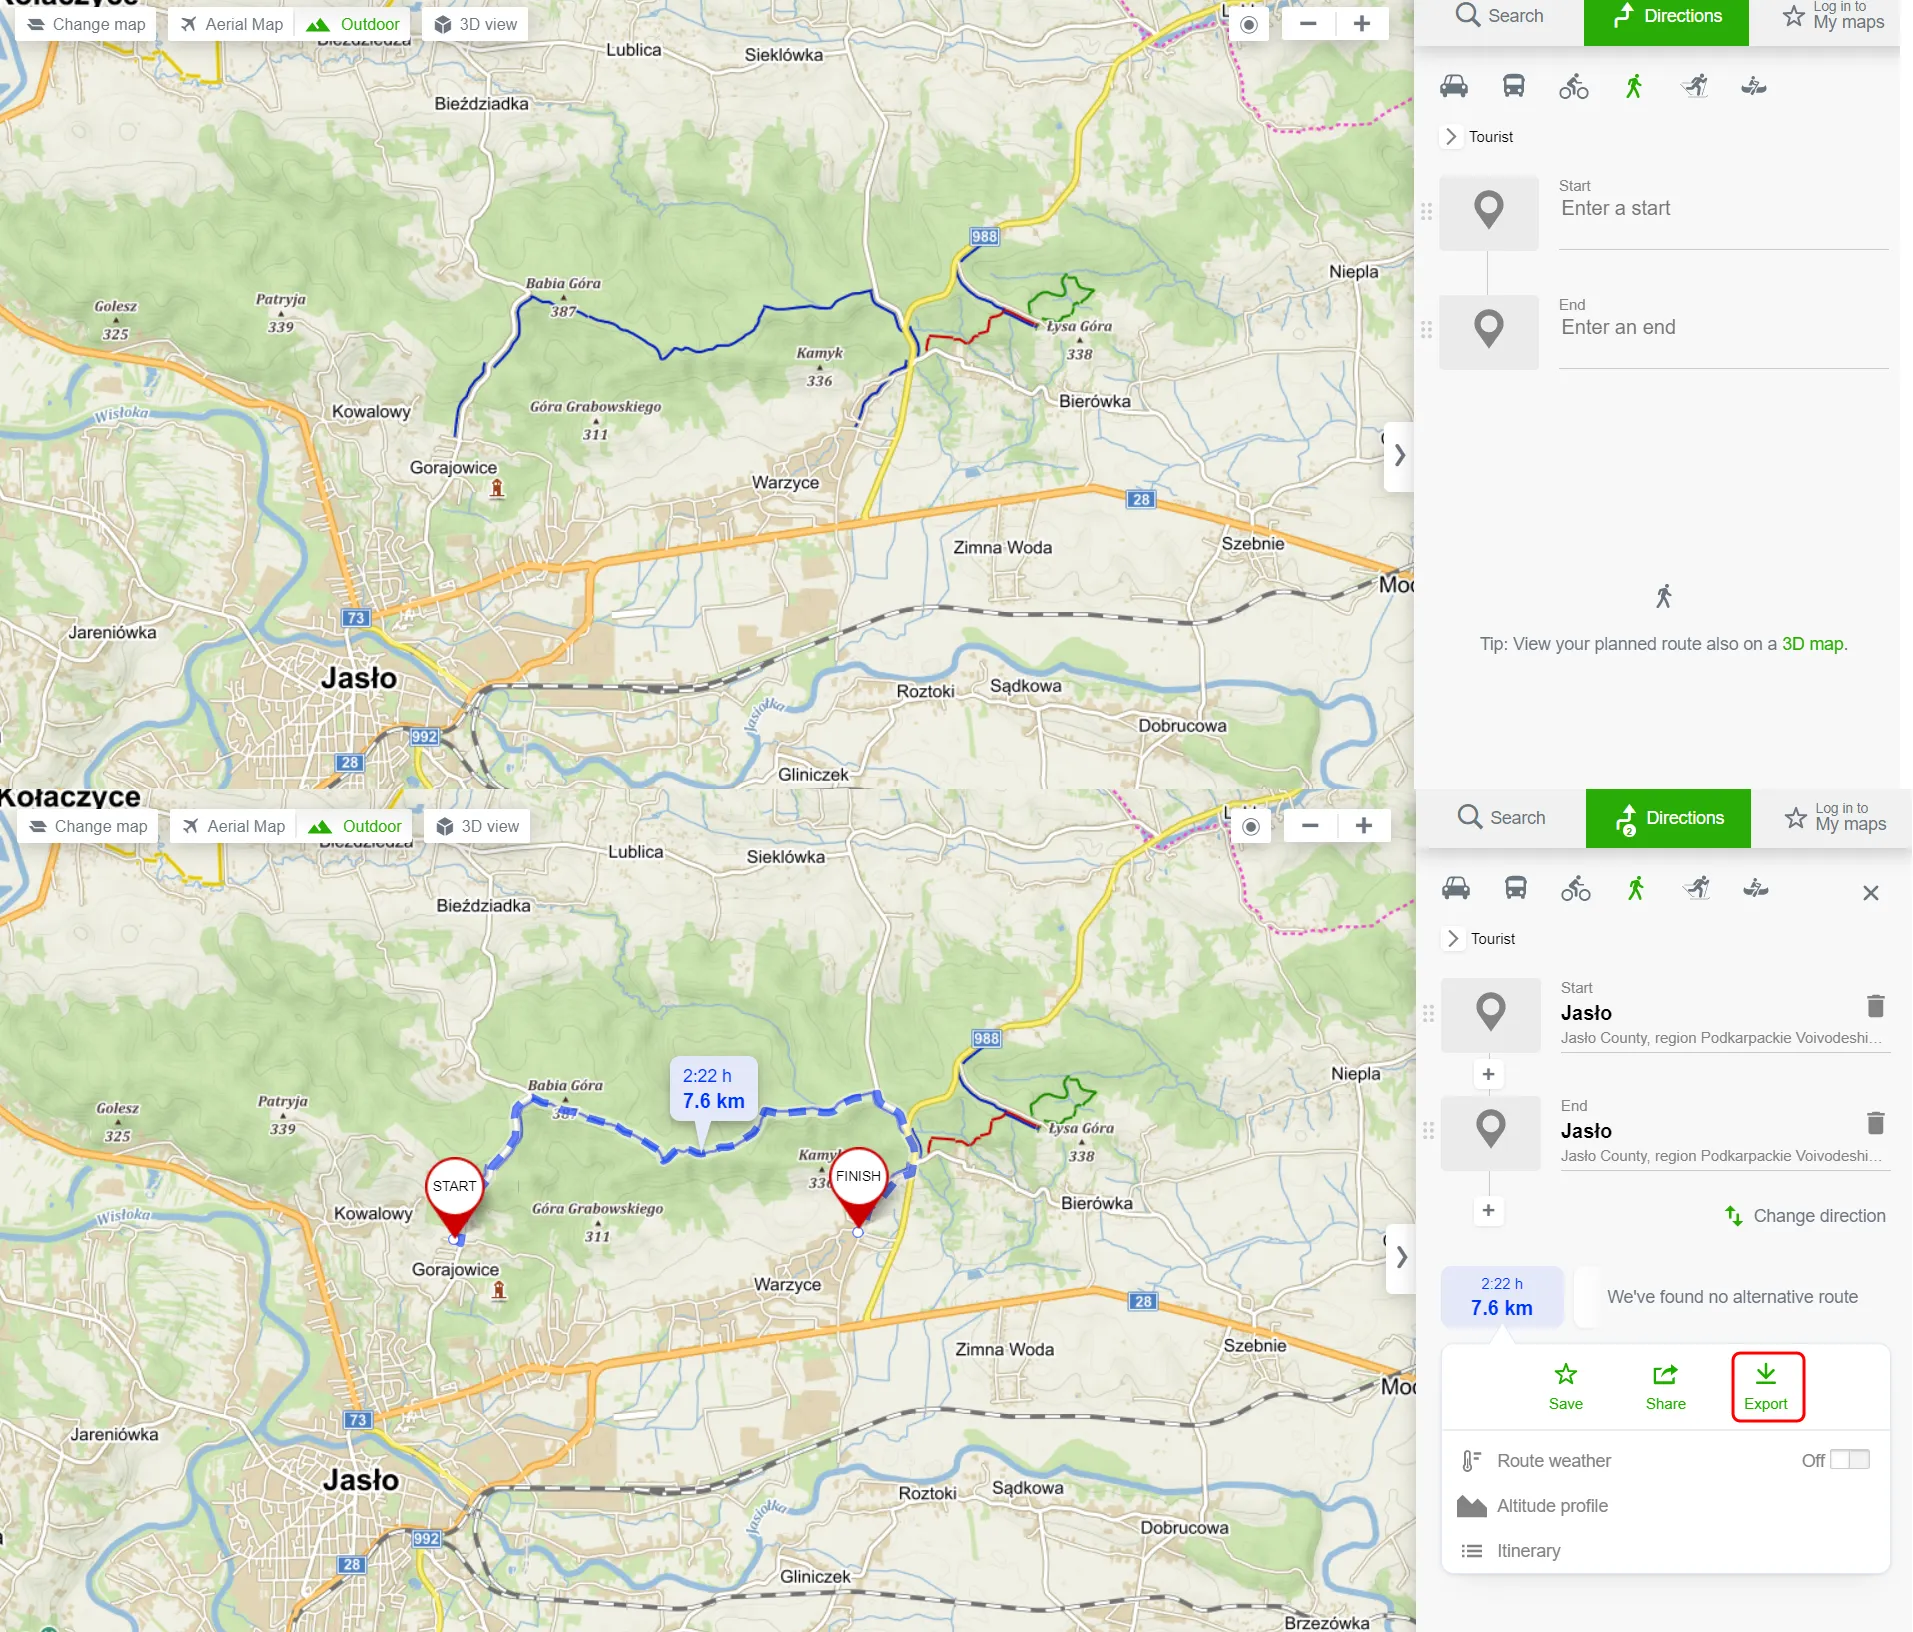 Mapy.cz tourist trails download